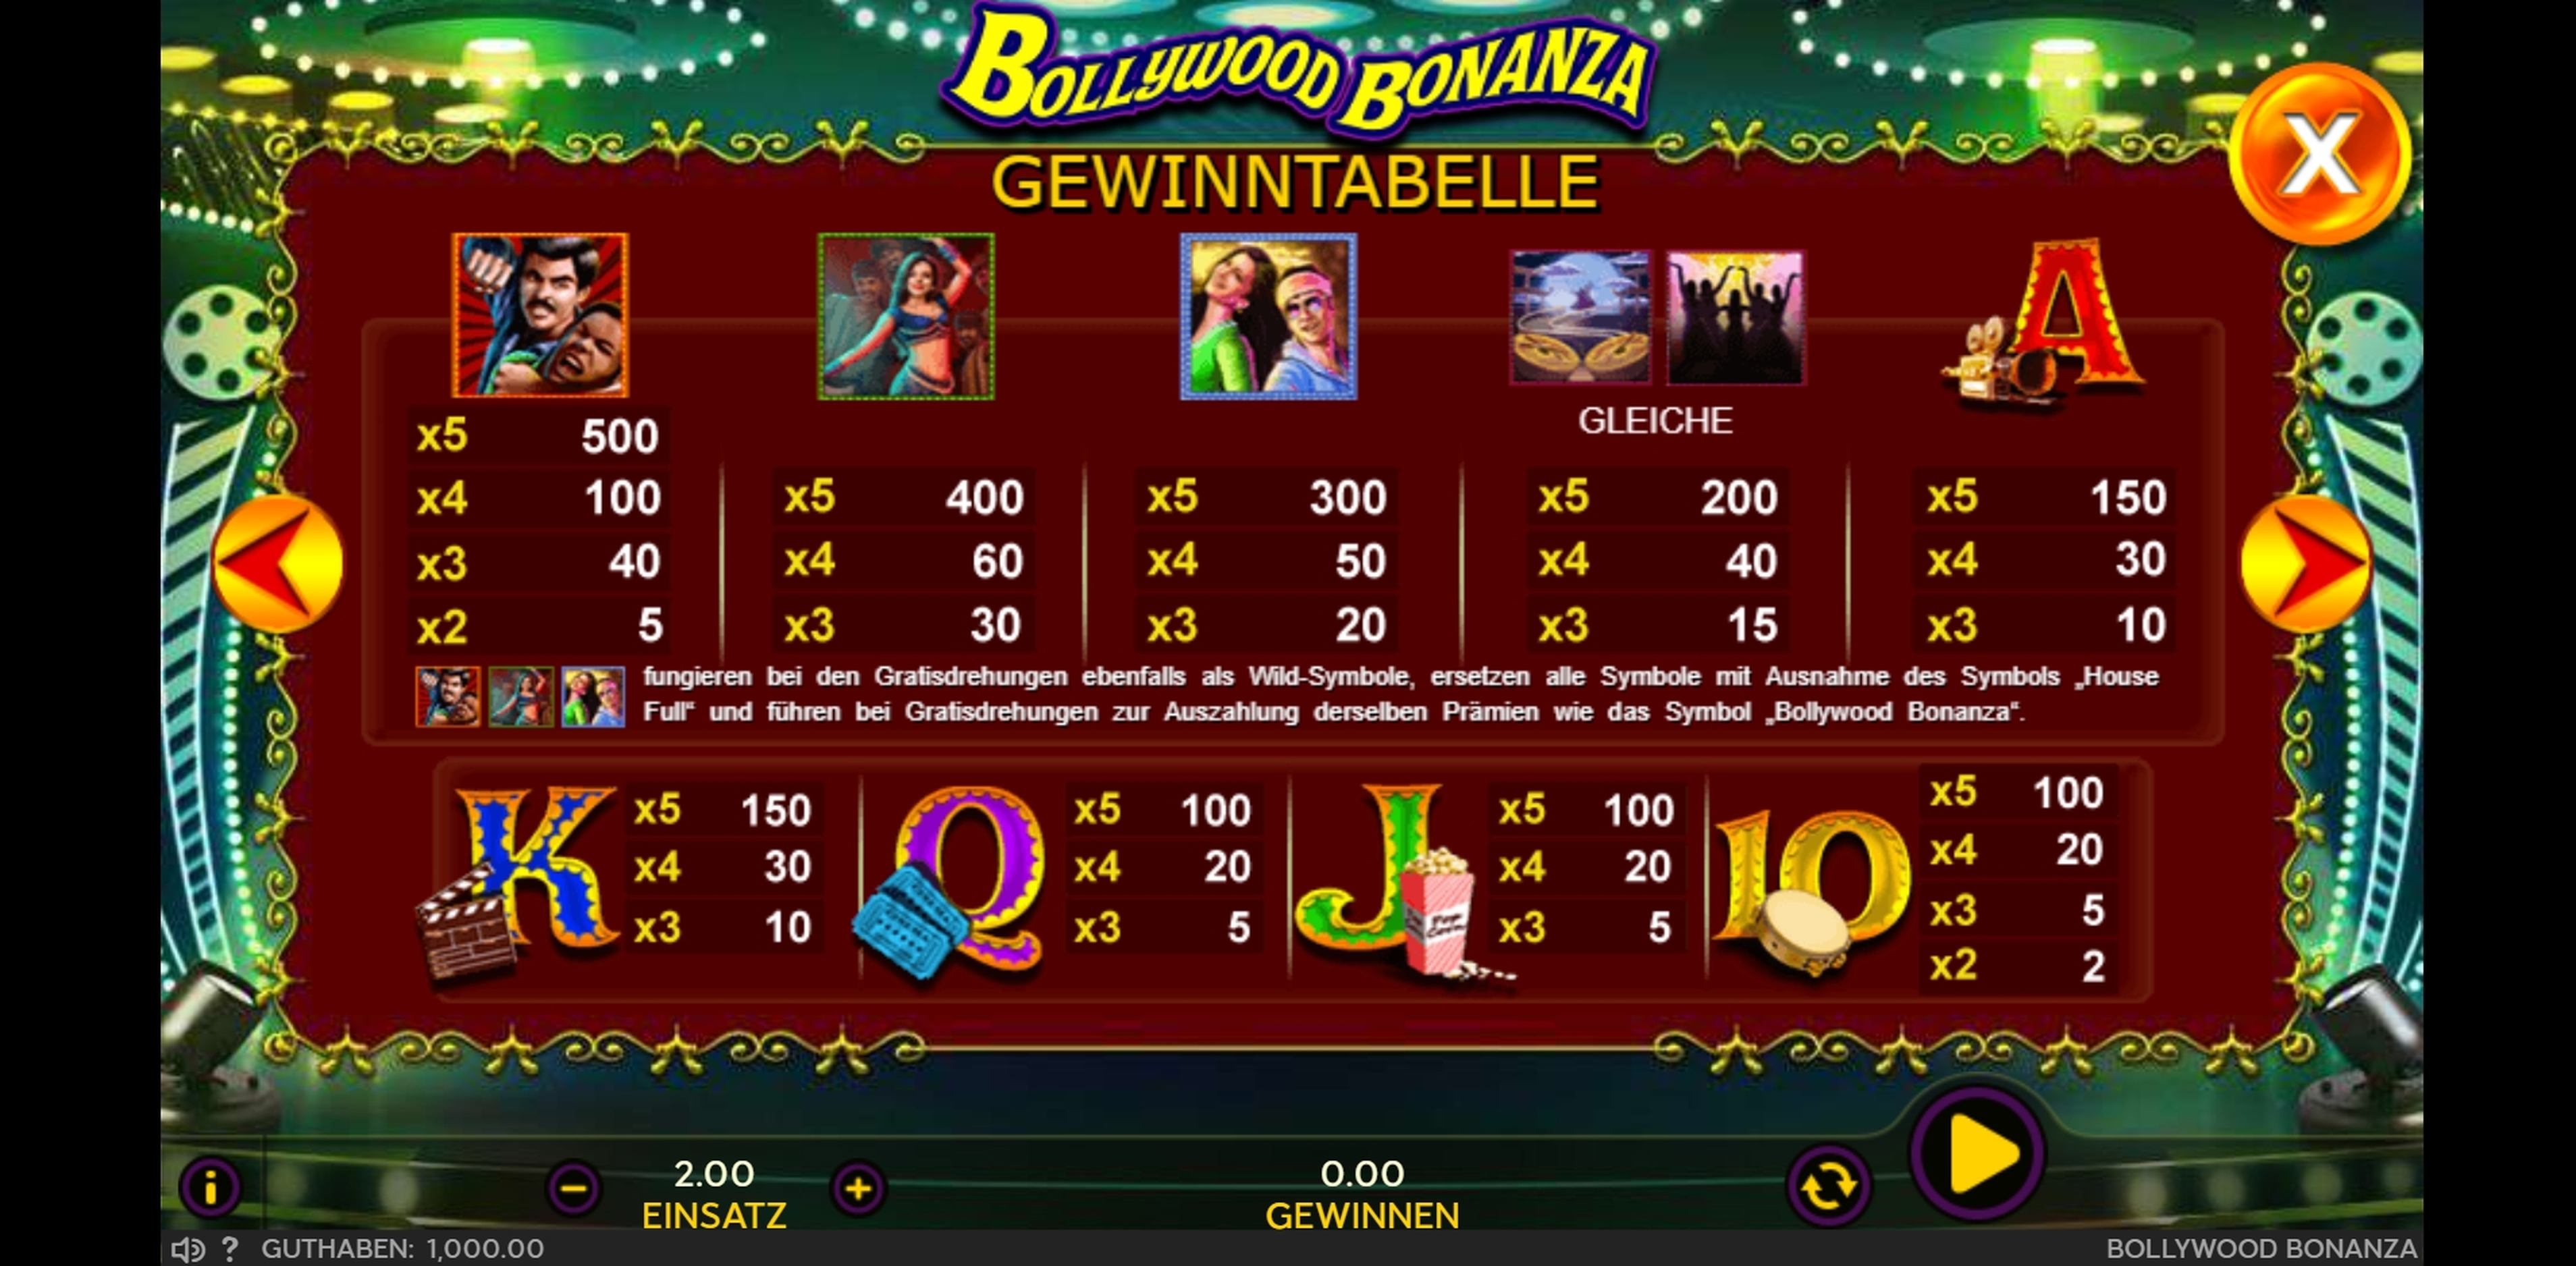 Info of Bollywood Bonanza Slot Game by 888 Gaming